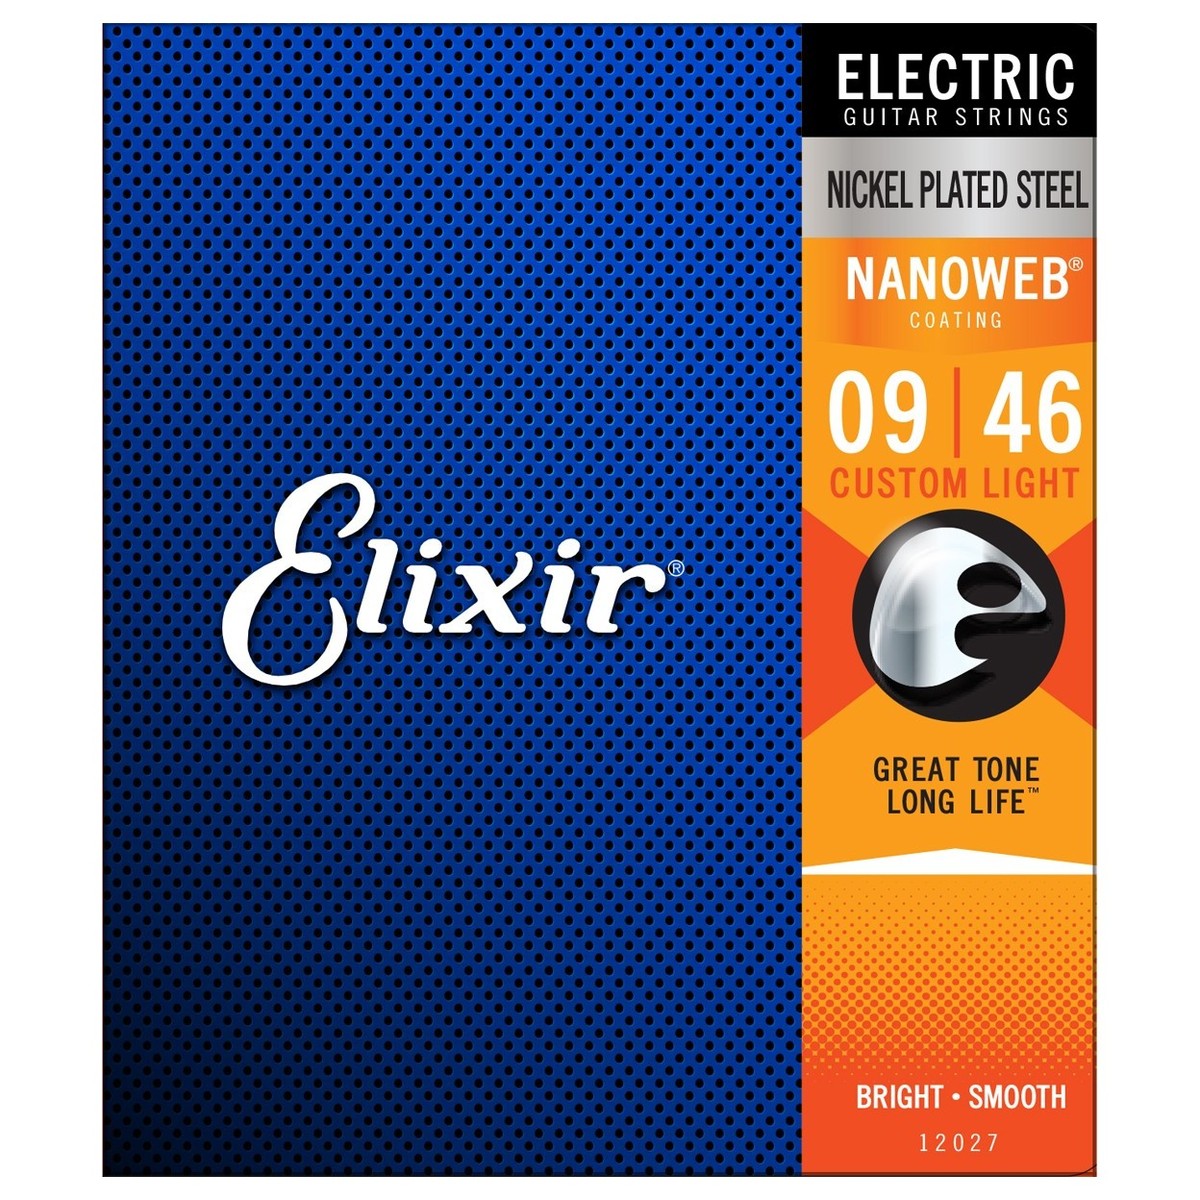 Set de cuerdas para guitarra eléctrica Elixir - 12027